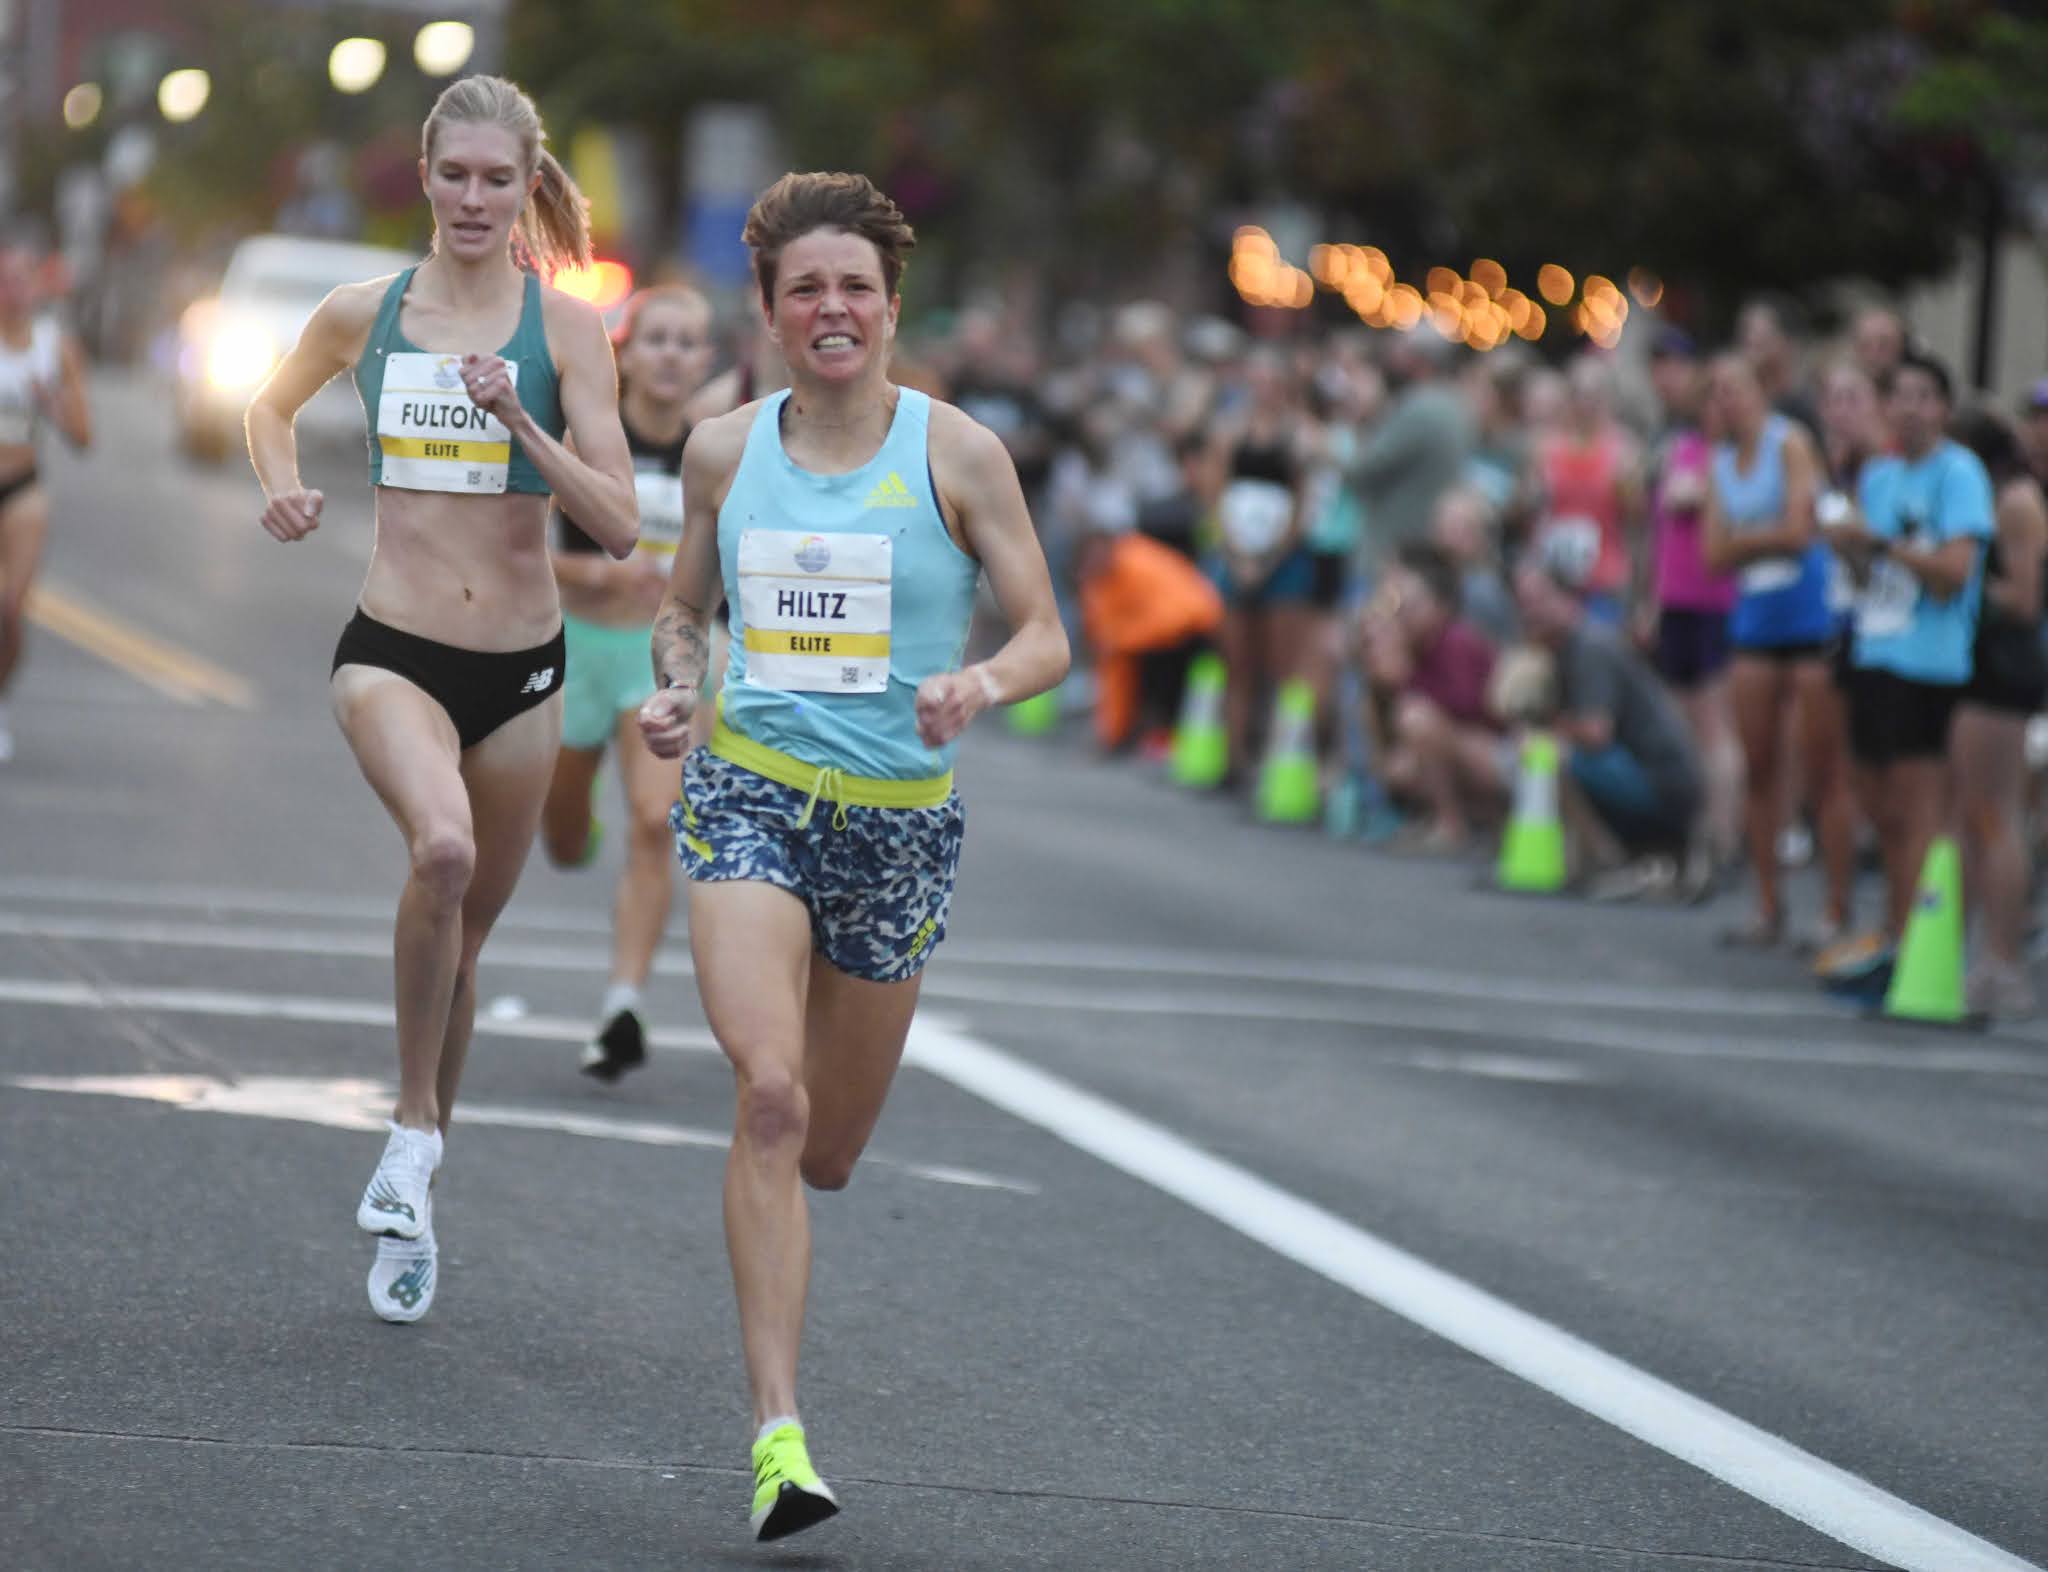 Sam Prakel wins Downtown Yakima Mile, while Nikki Hiltz earns bonus for fastest womens road mile...